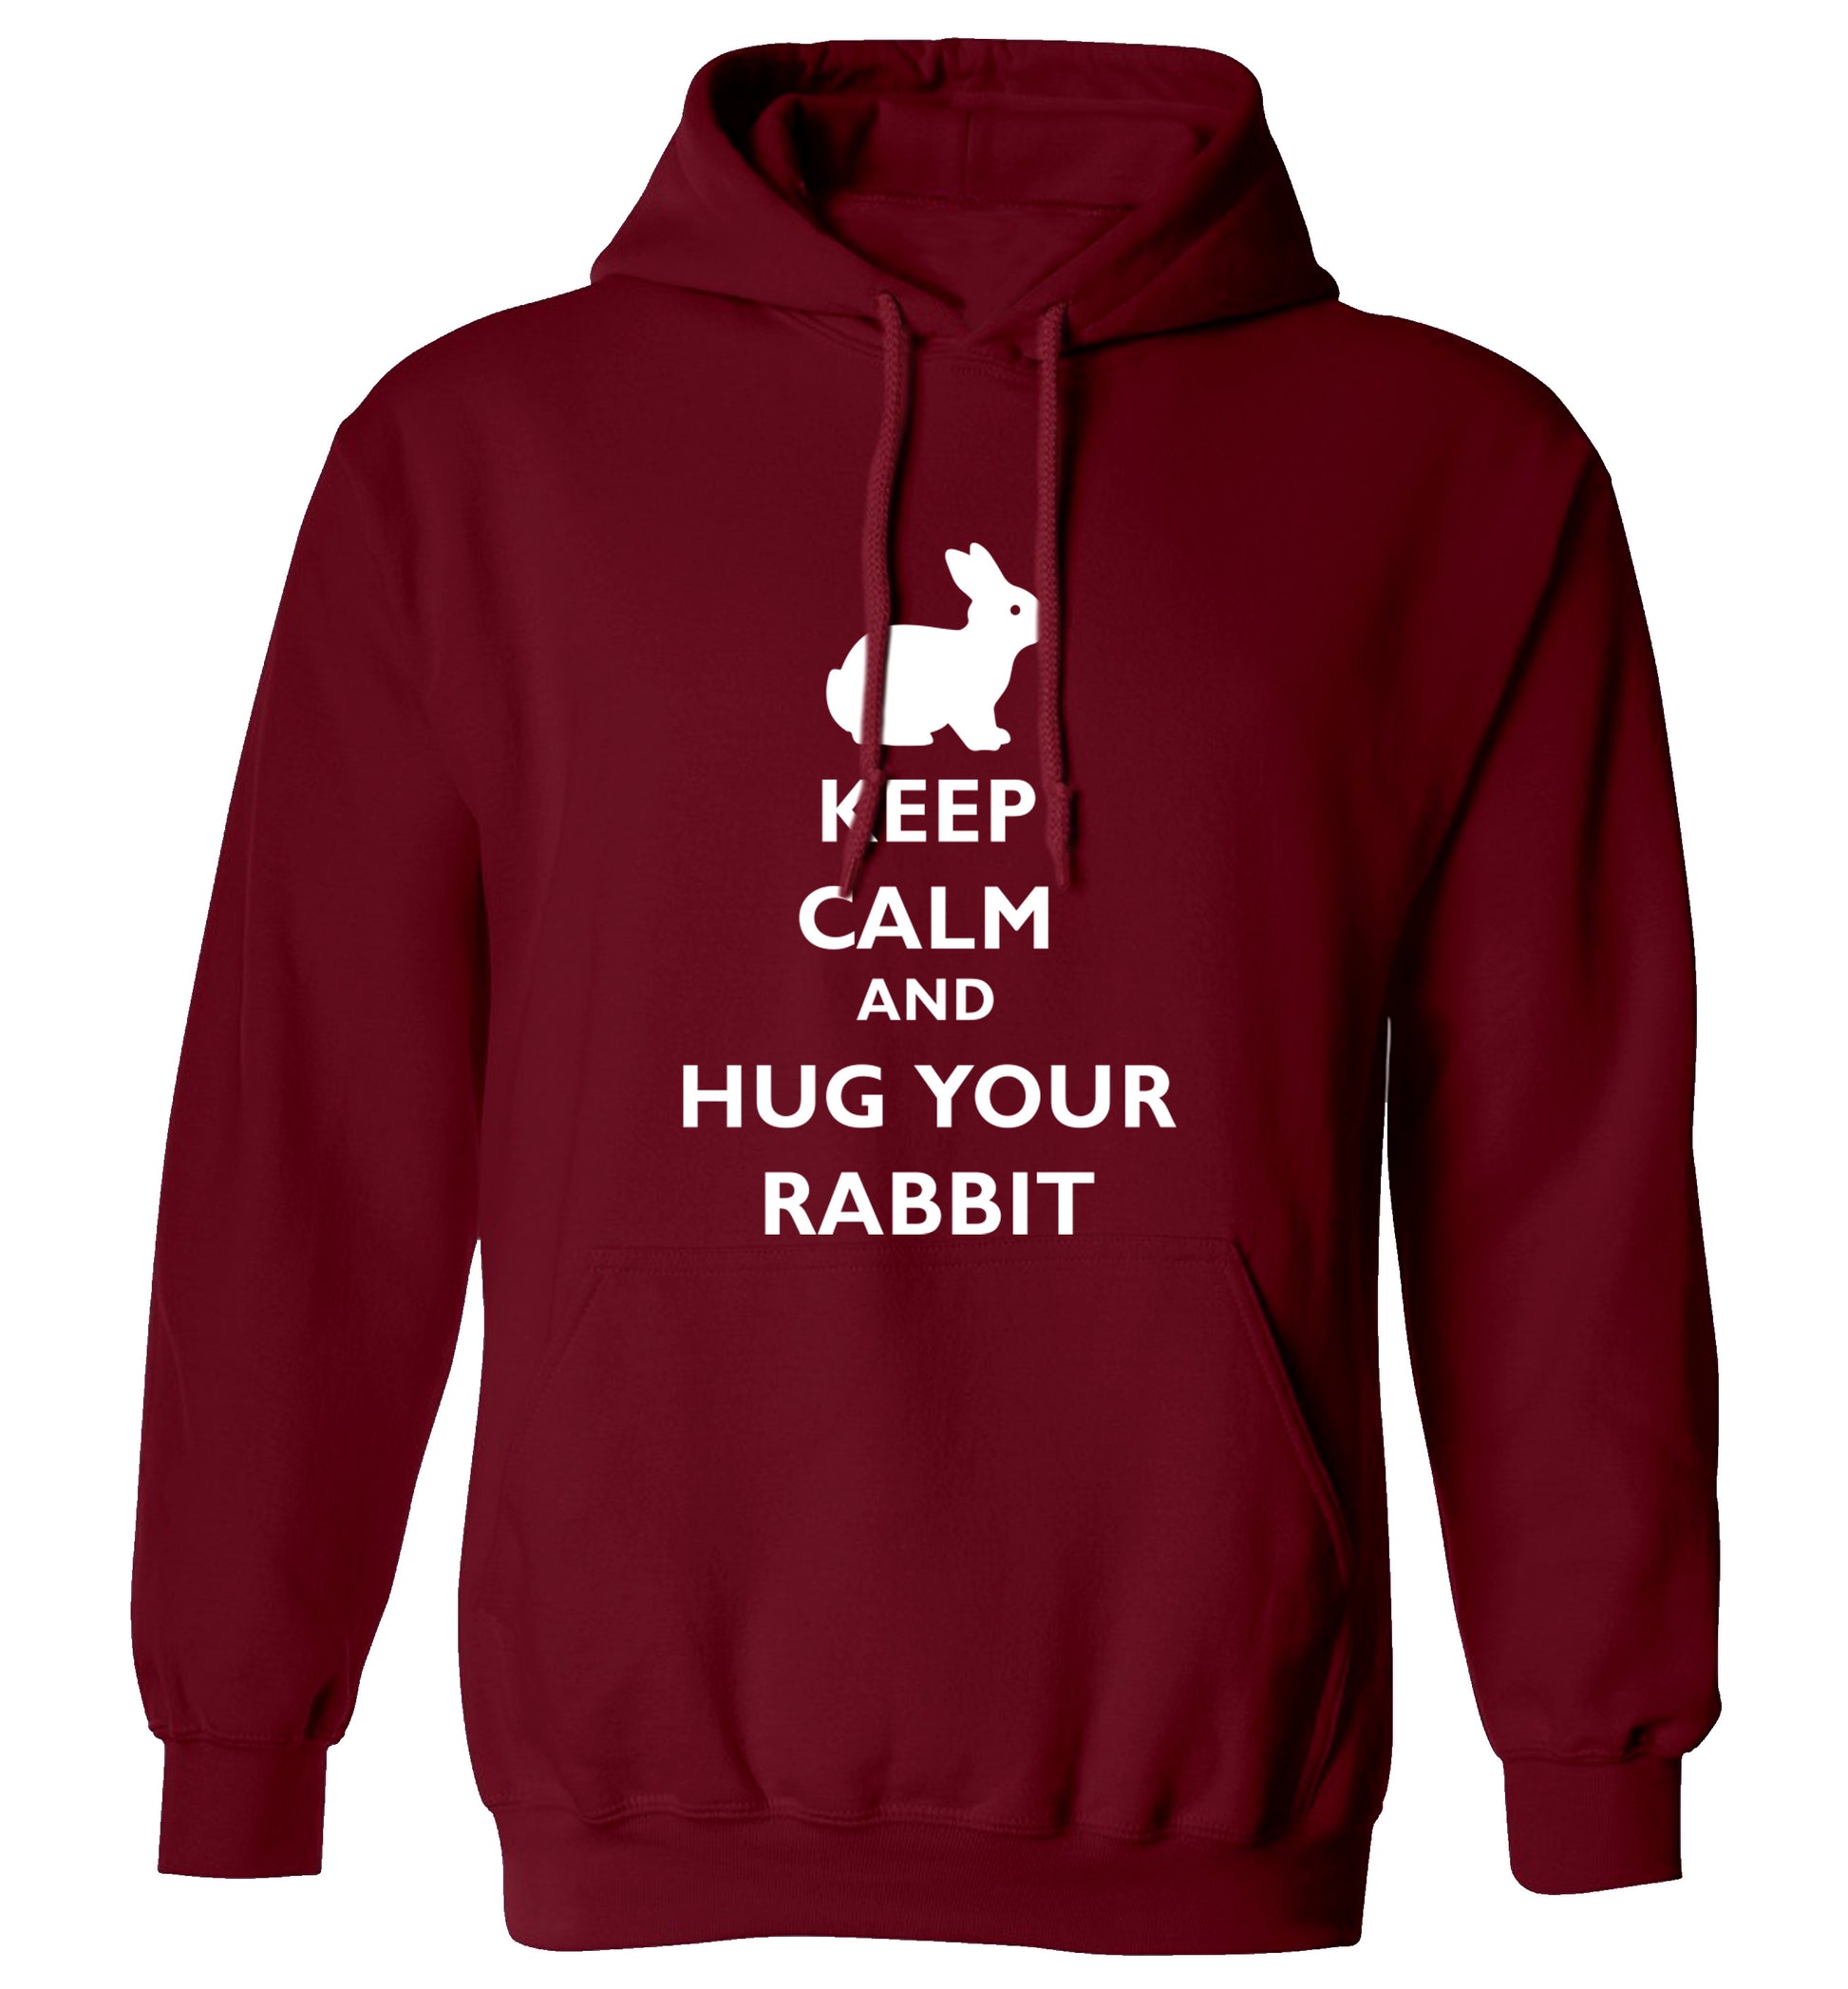 Keep calm and hug your rabbit adults unisex maroon hoodie 2XL